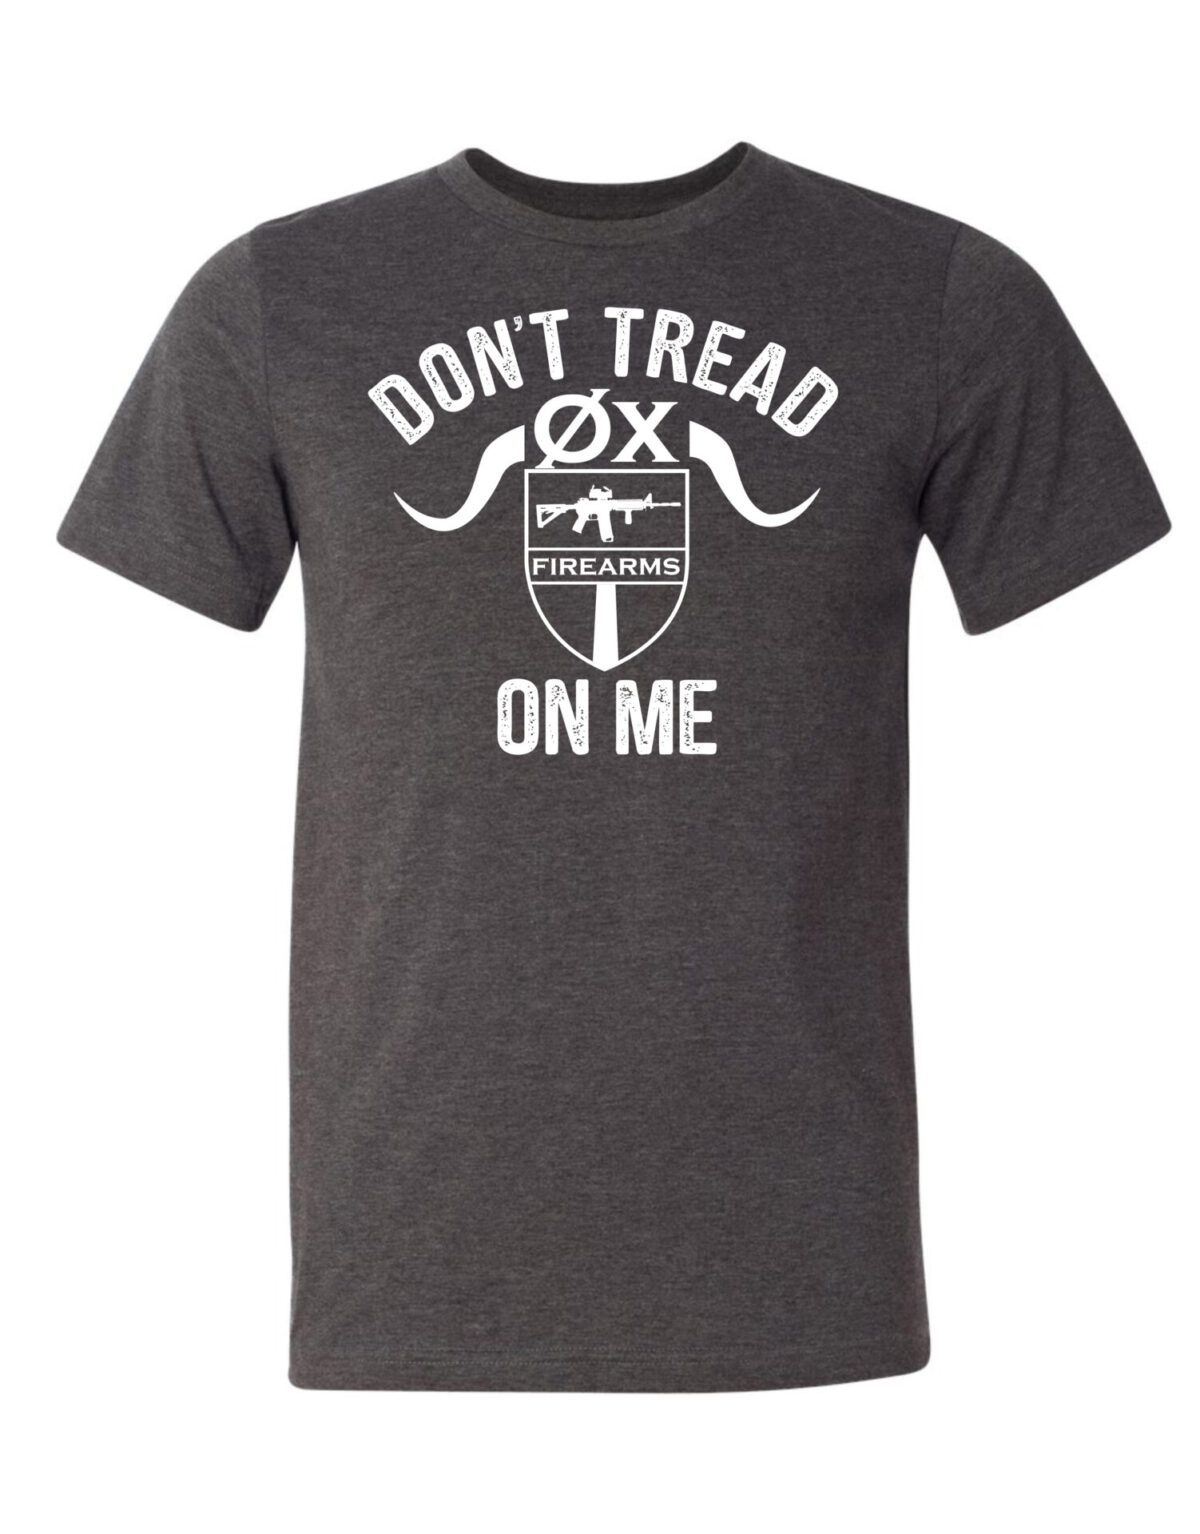 Ox Firearms T Shirt Front